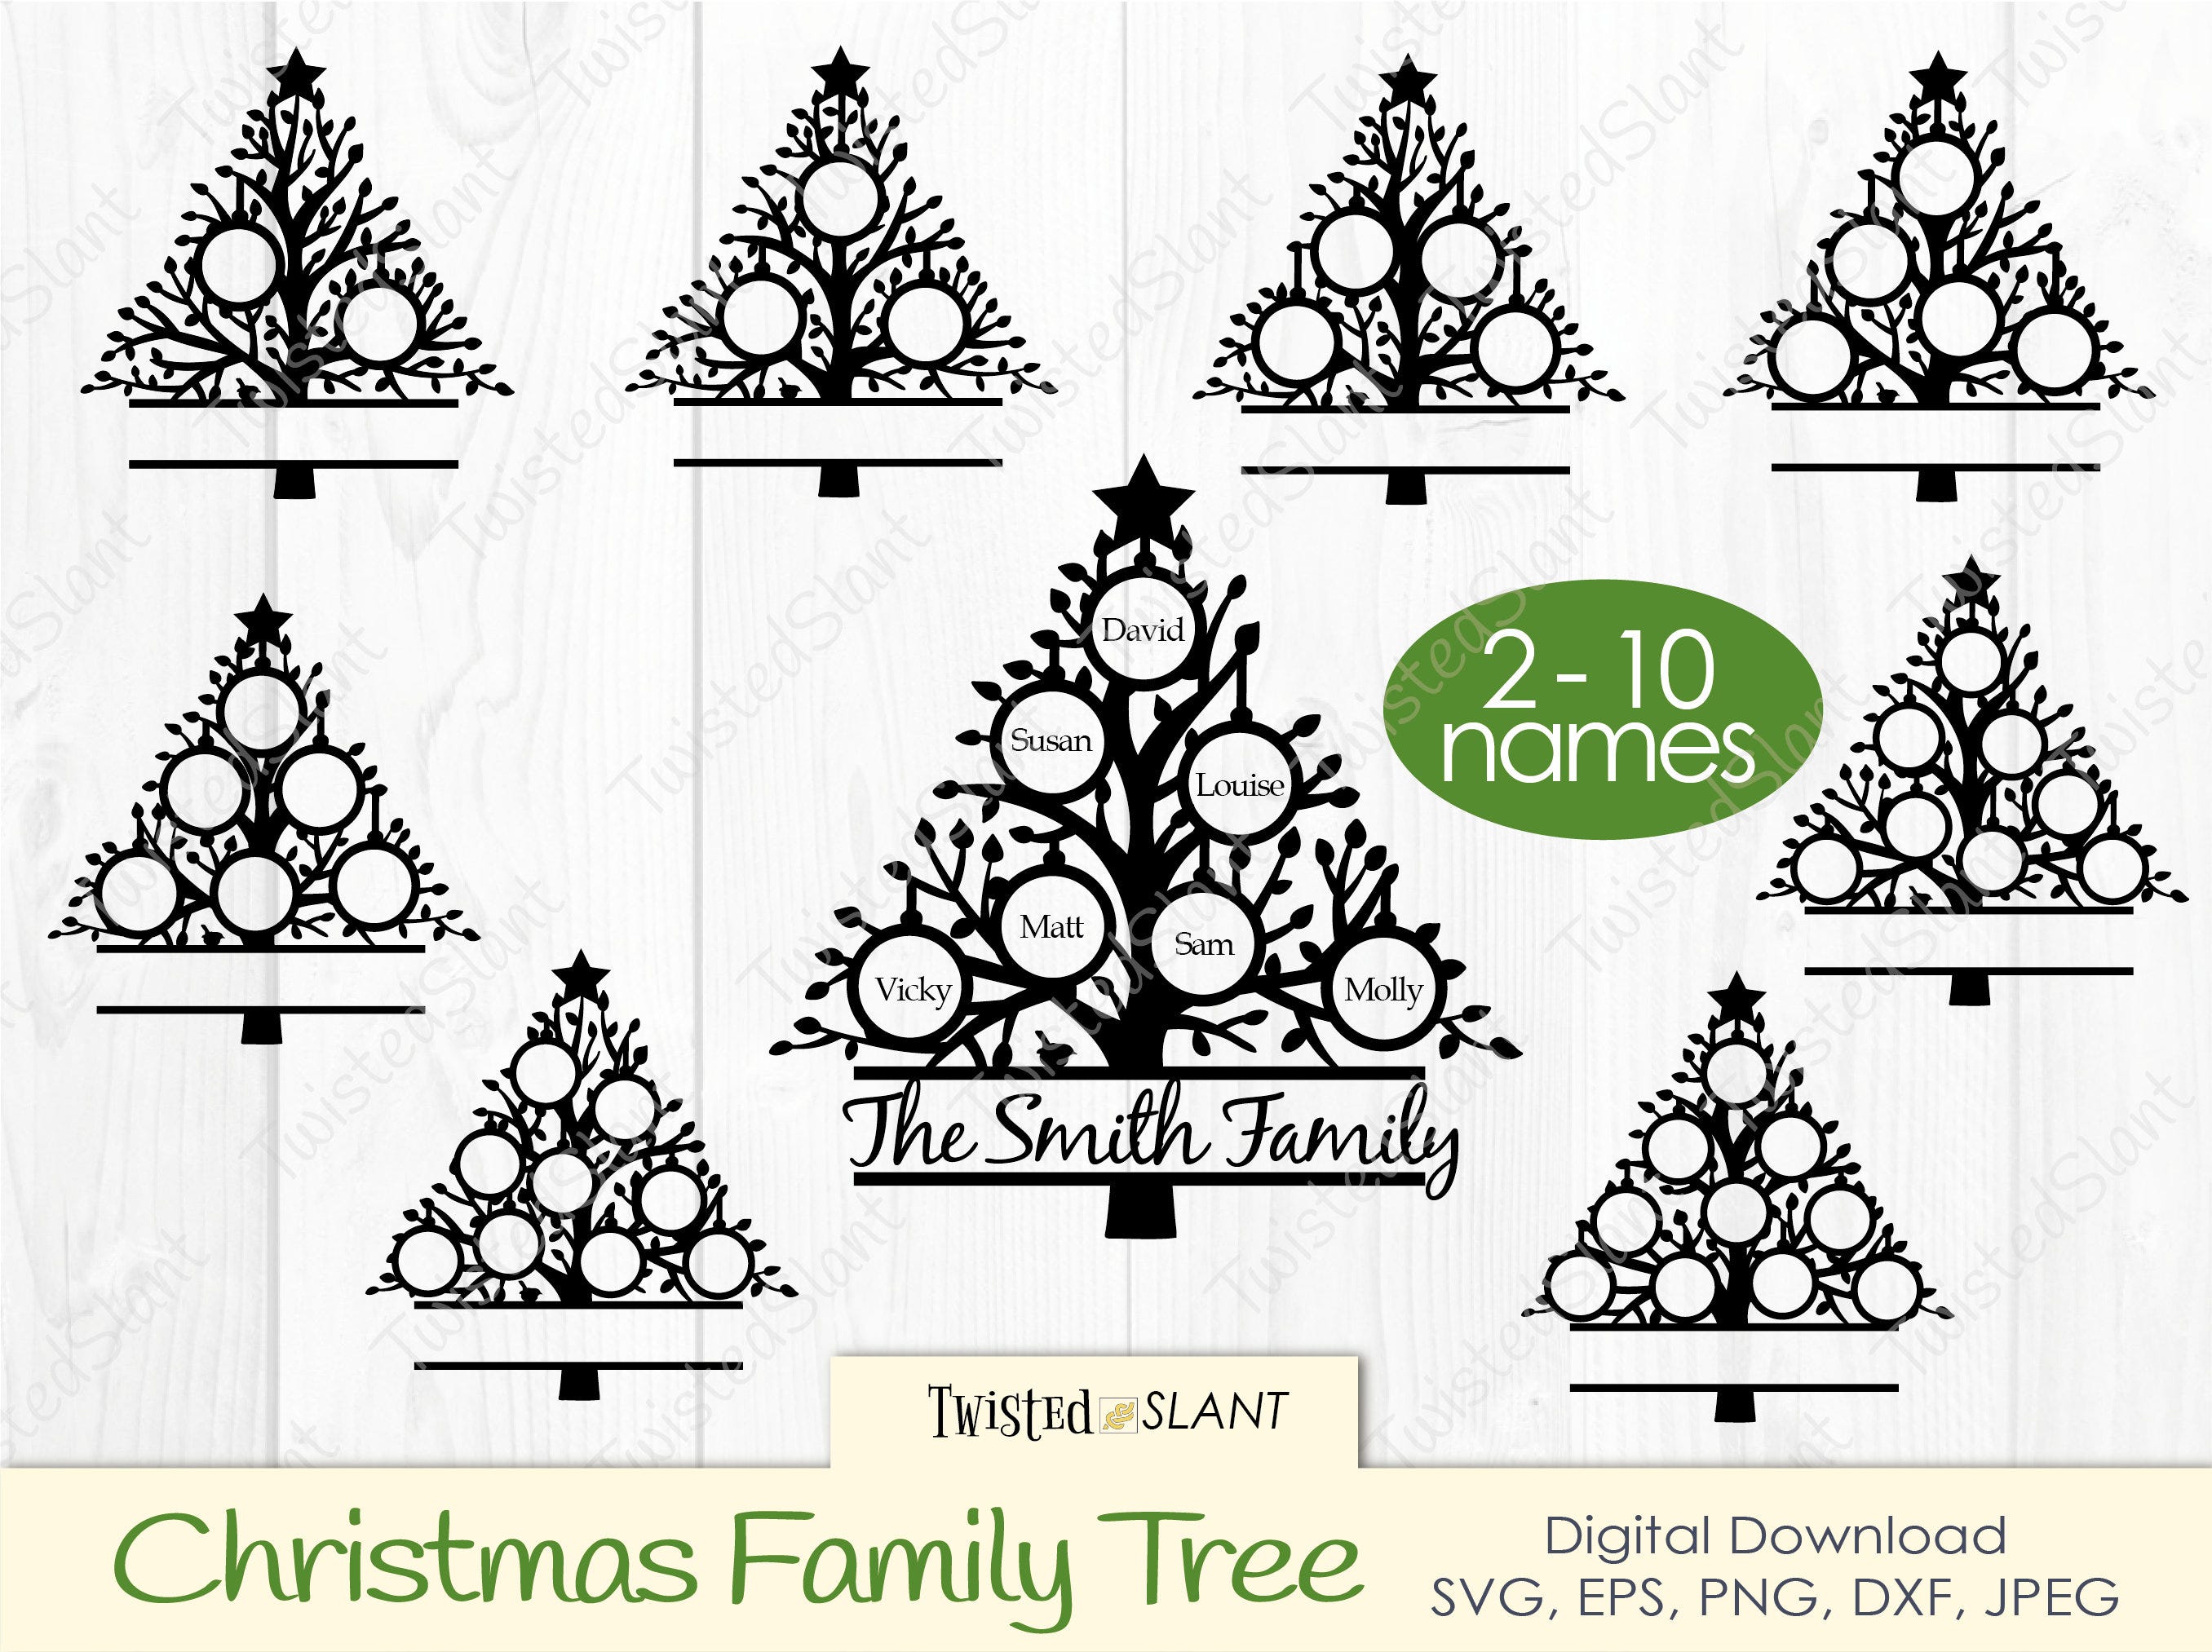 Christmas Family Tree svg, Family tree svg, Christmas monogram svg, Christmas tree clipart, family name svg, family tree png, Christmas svg